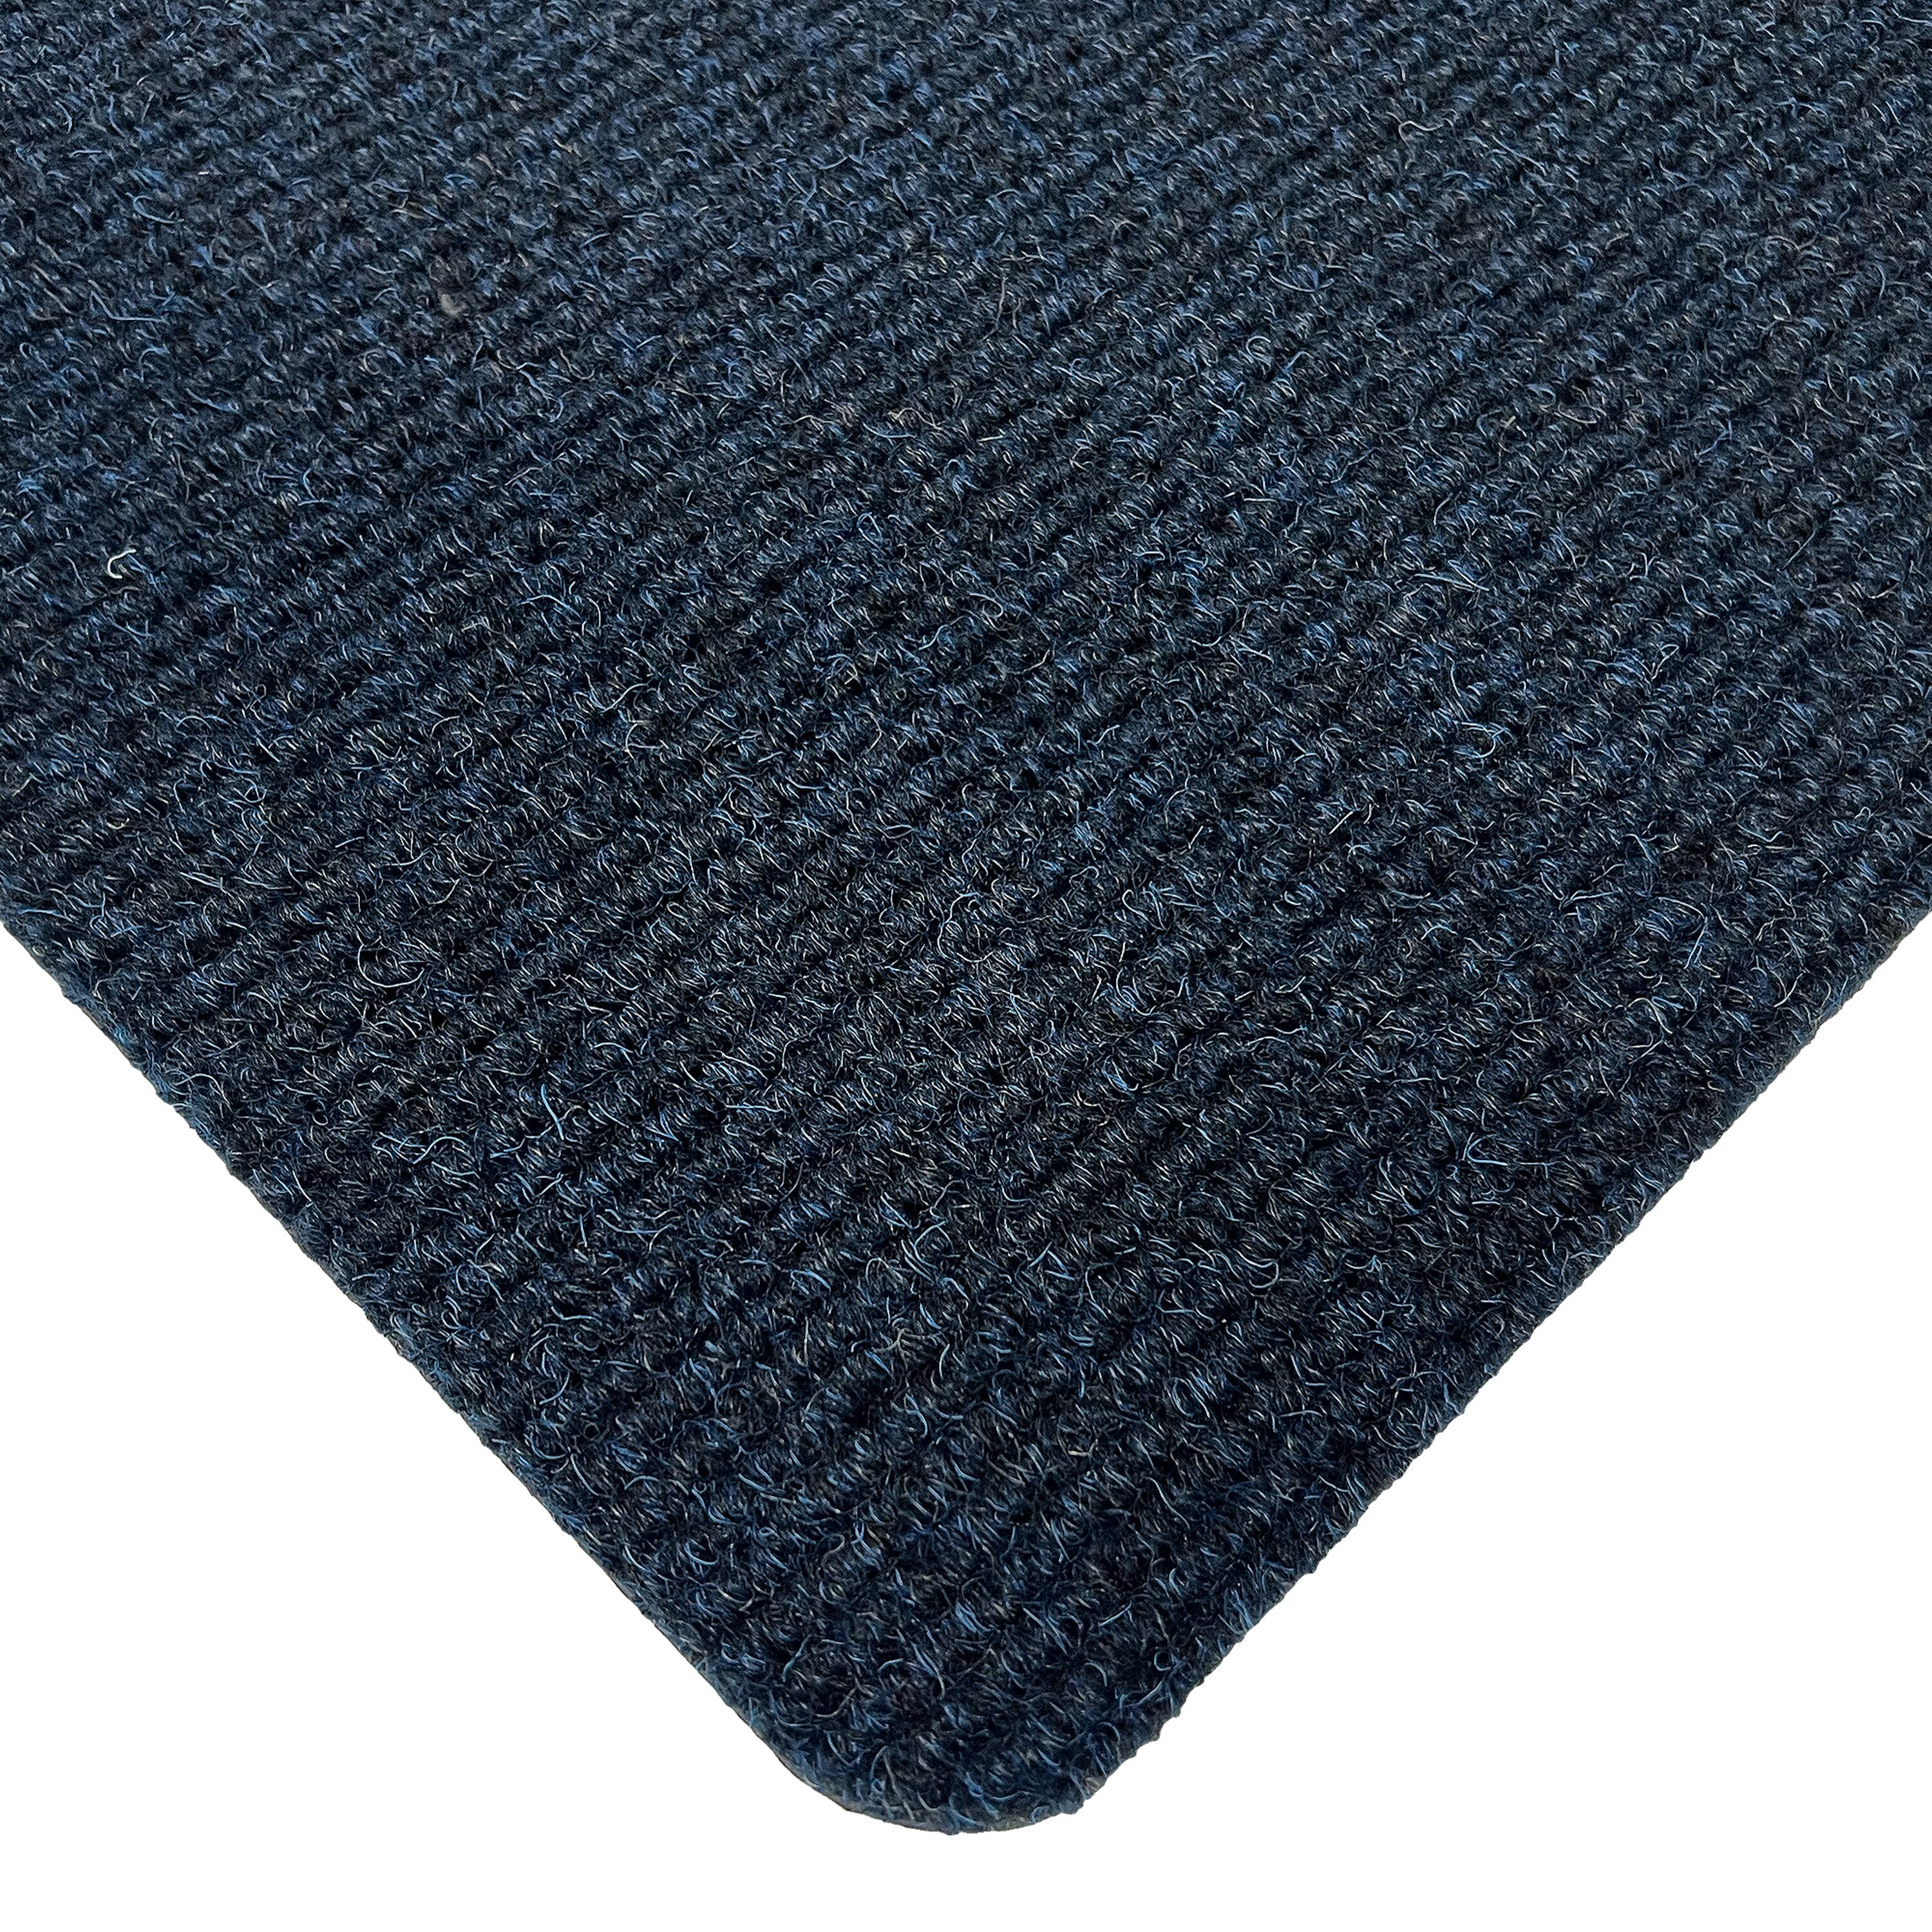 Modrá vstupní rohož (metráž) FLOMA Mega Rib - délka 1 cm, šířka 200 cm, výška 1,3 cm